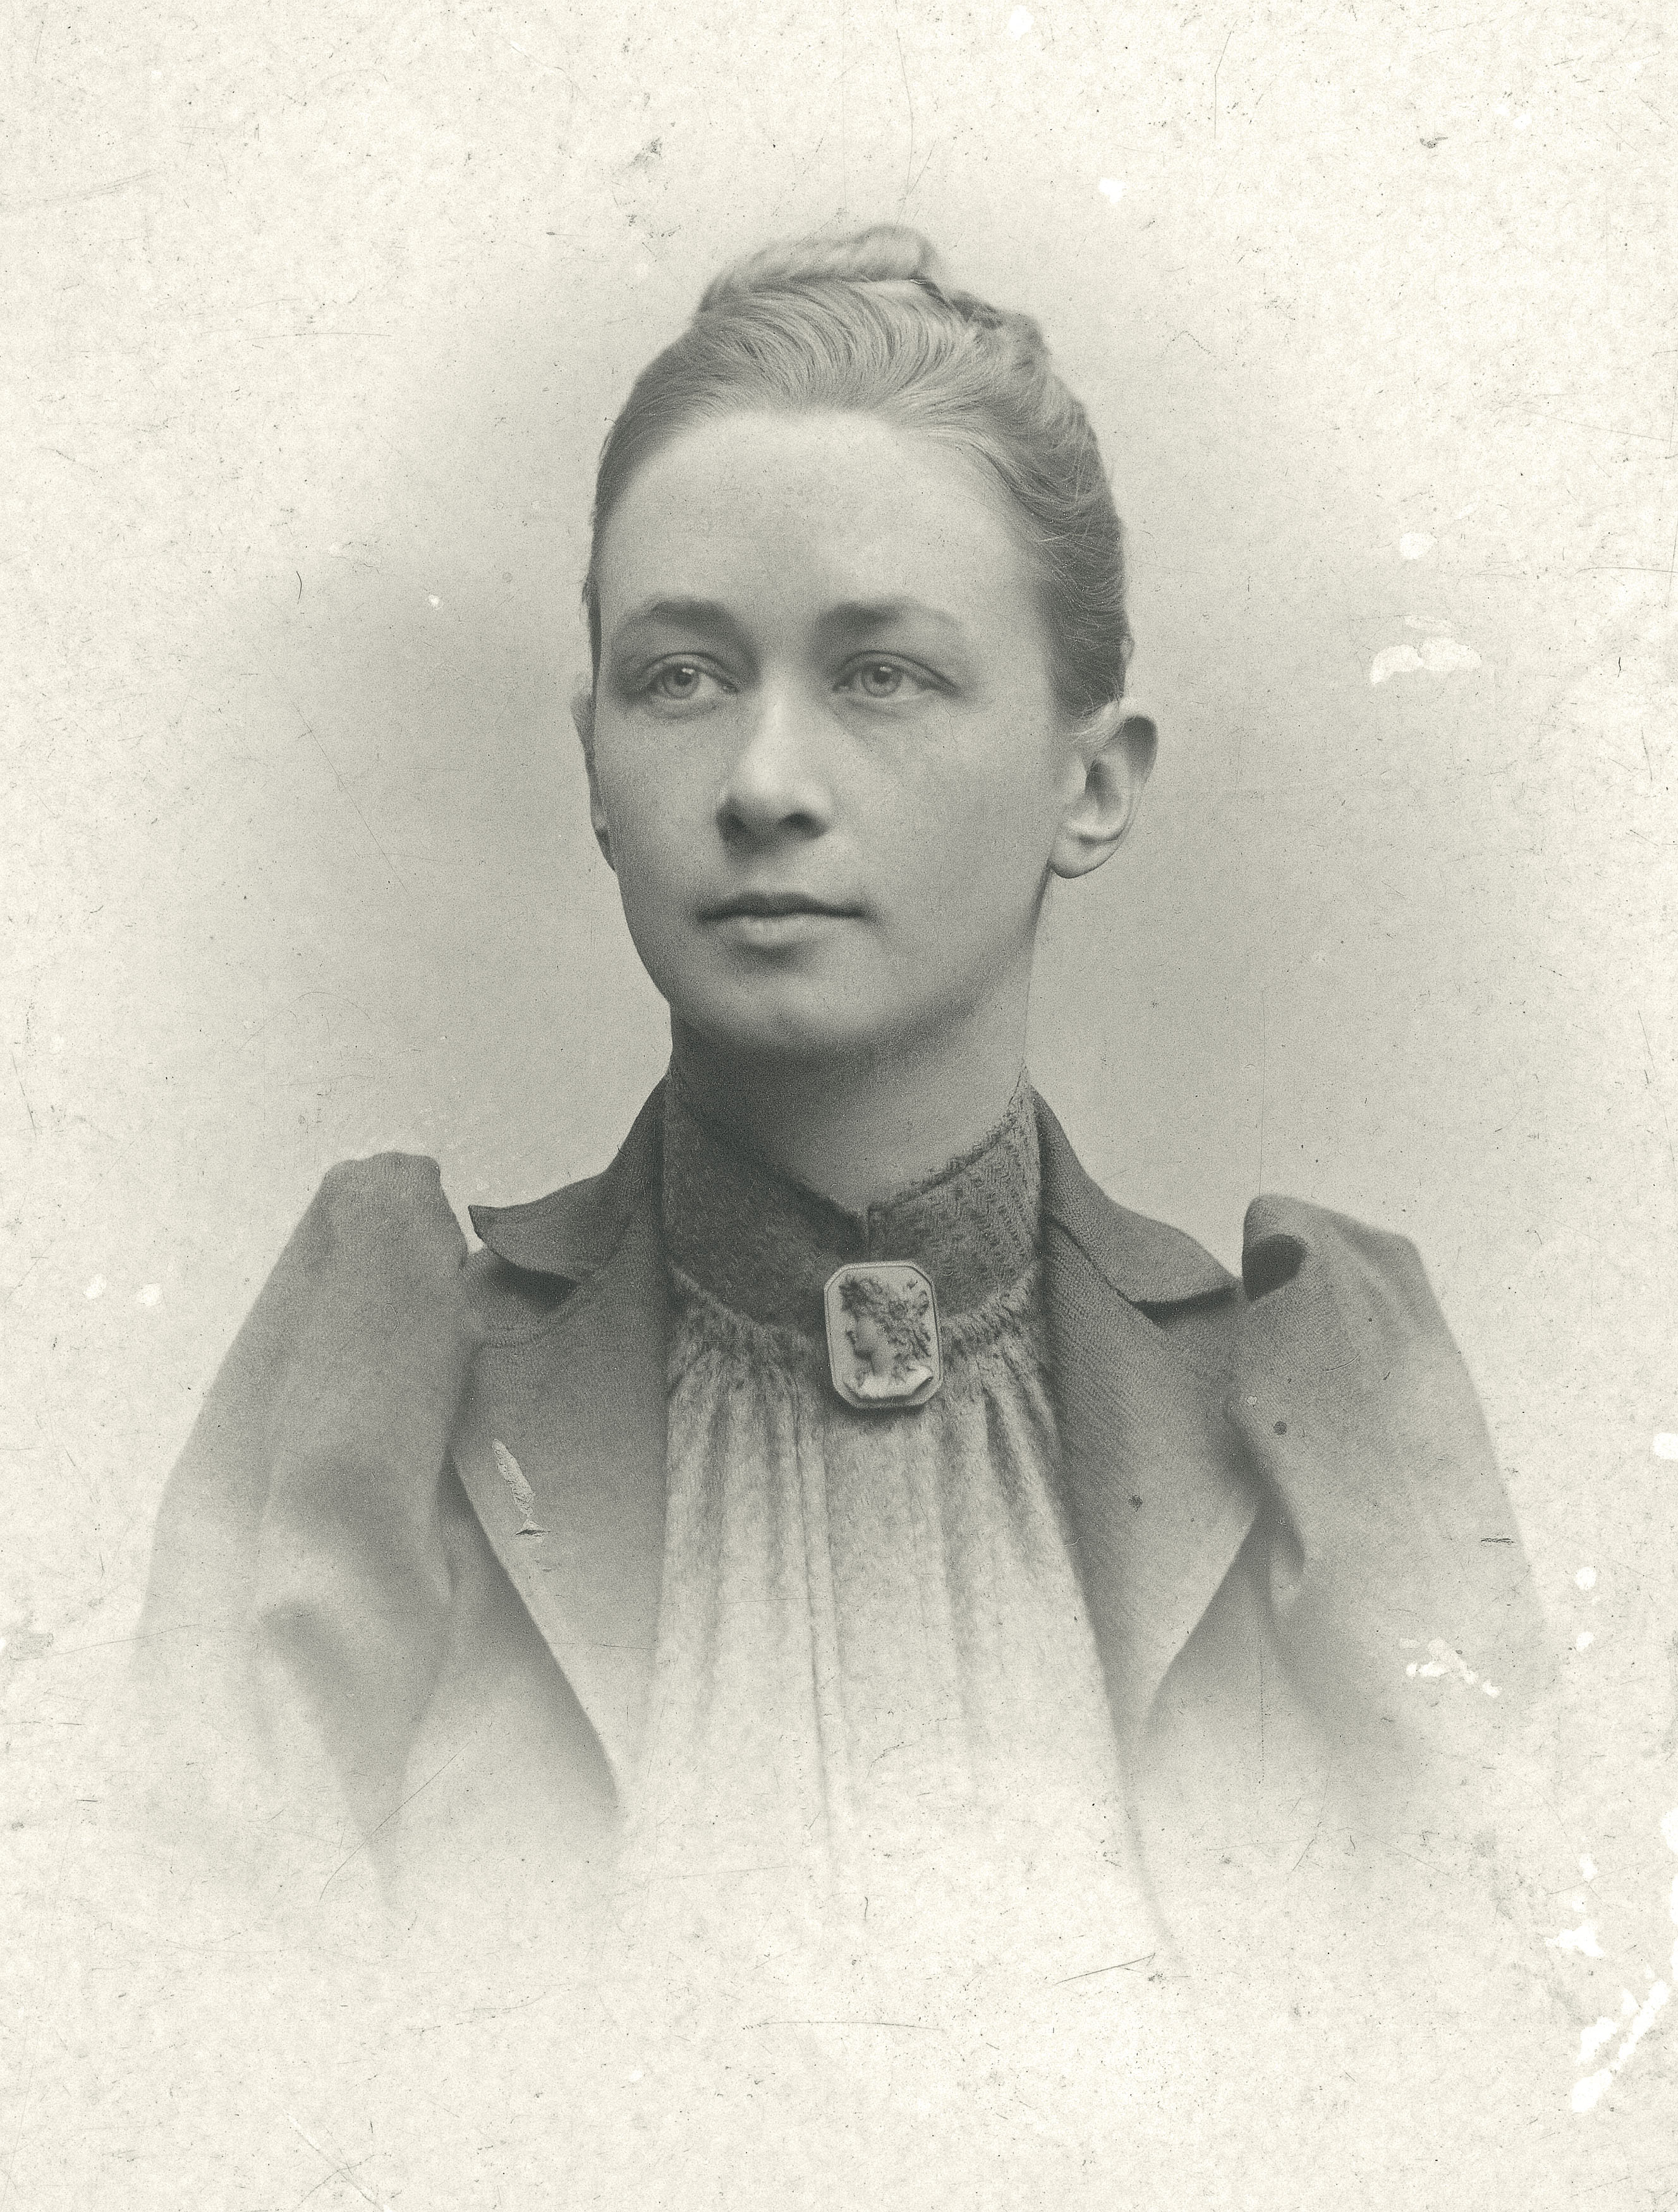 Hilma_af_Klint,_portrait_photograph_published_in_1901